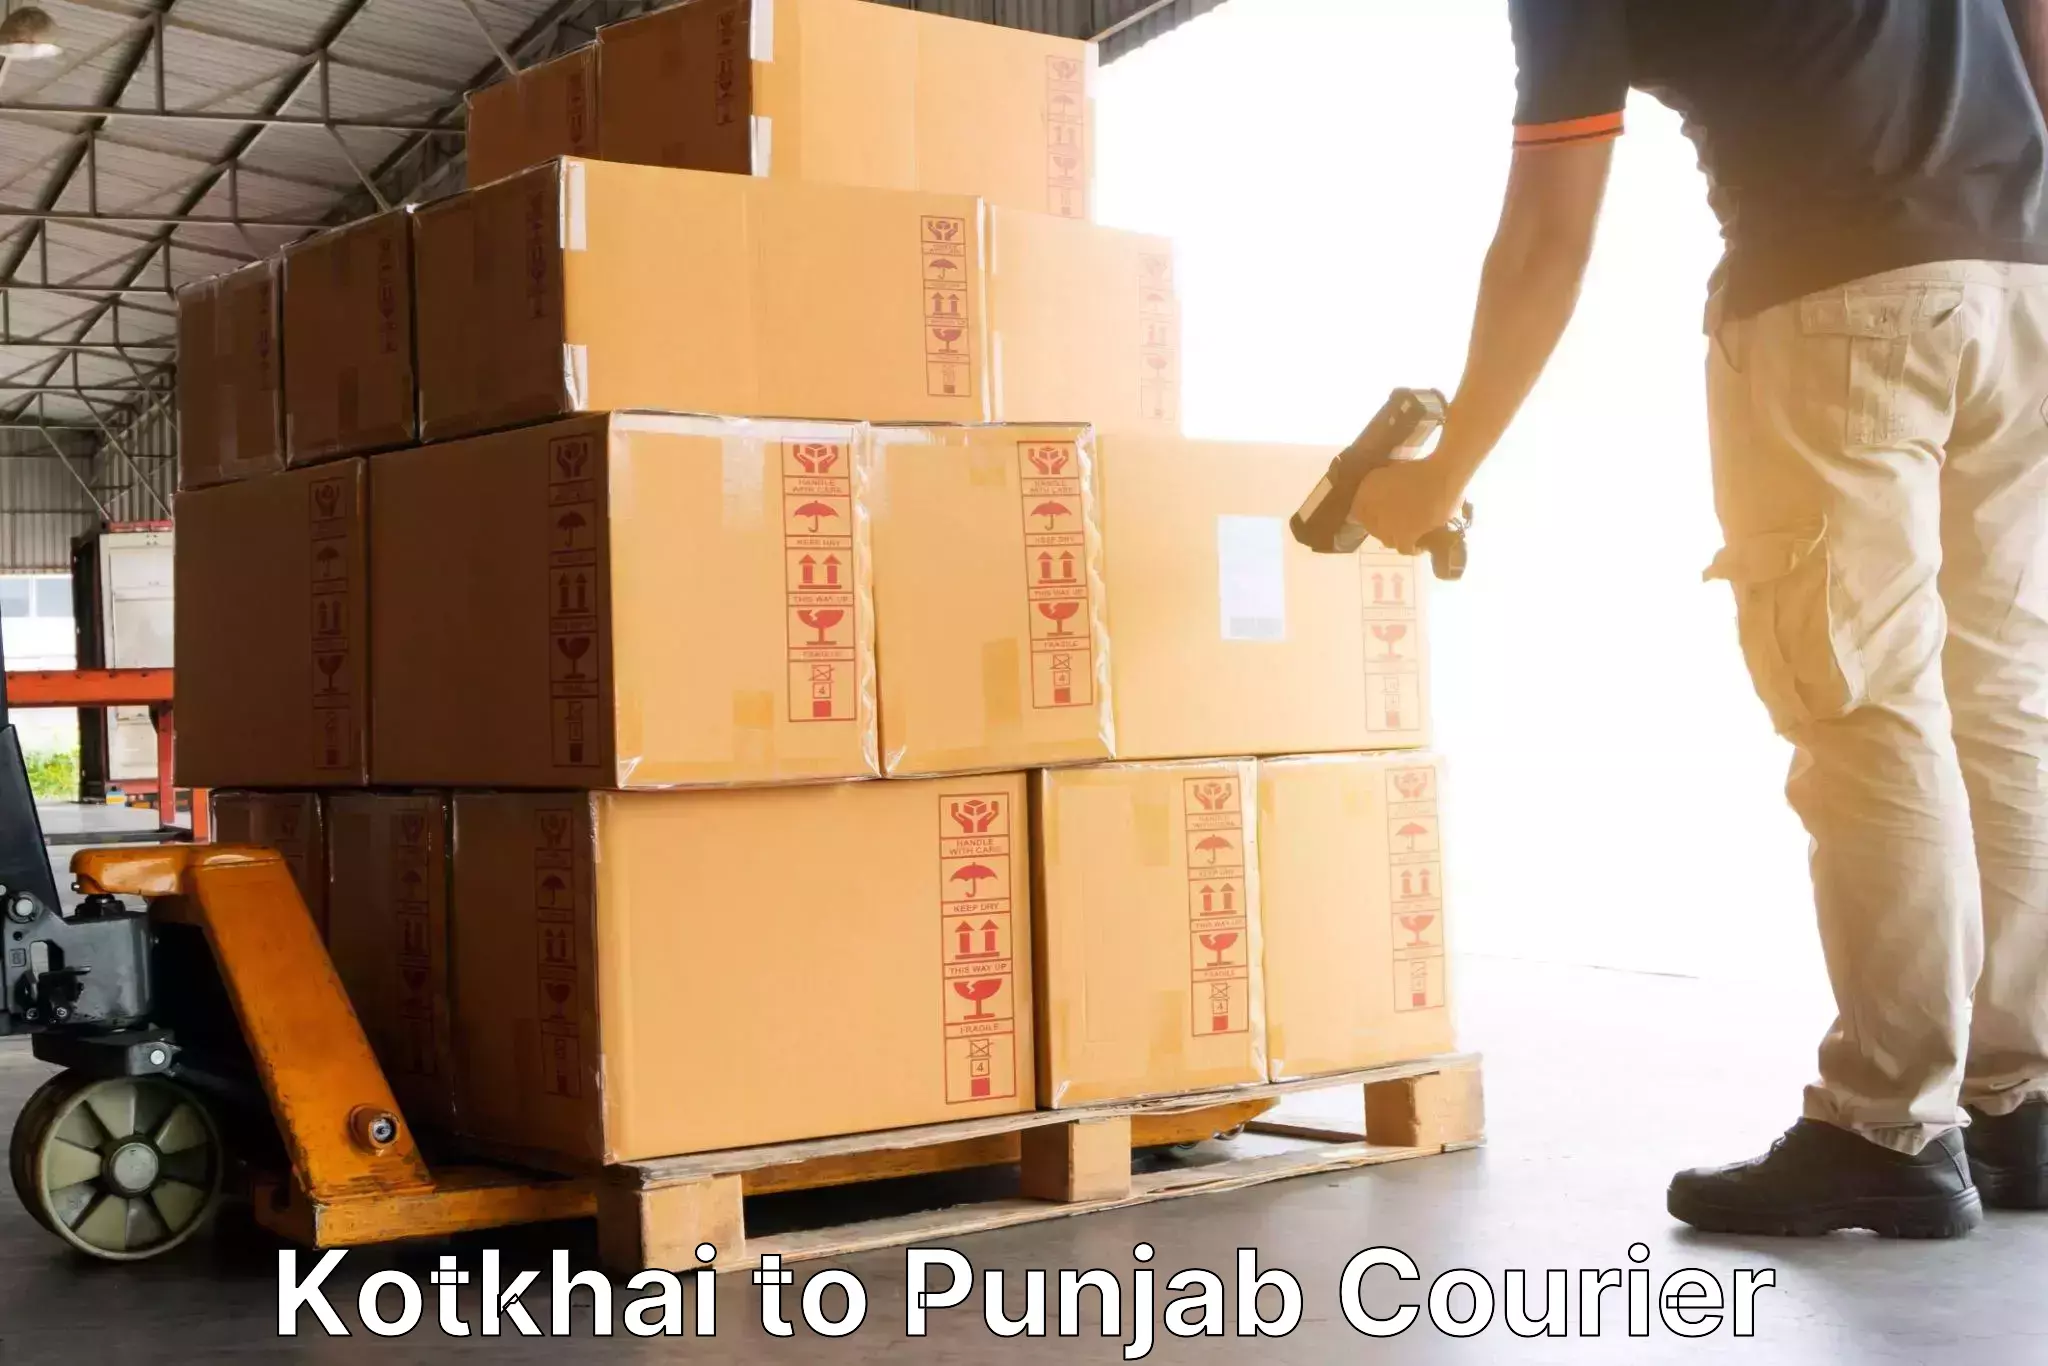 Multi-service courier options in Kotkhai to Malerkotla